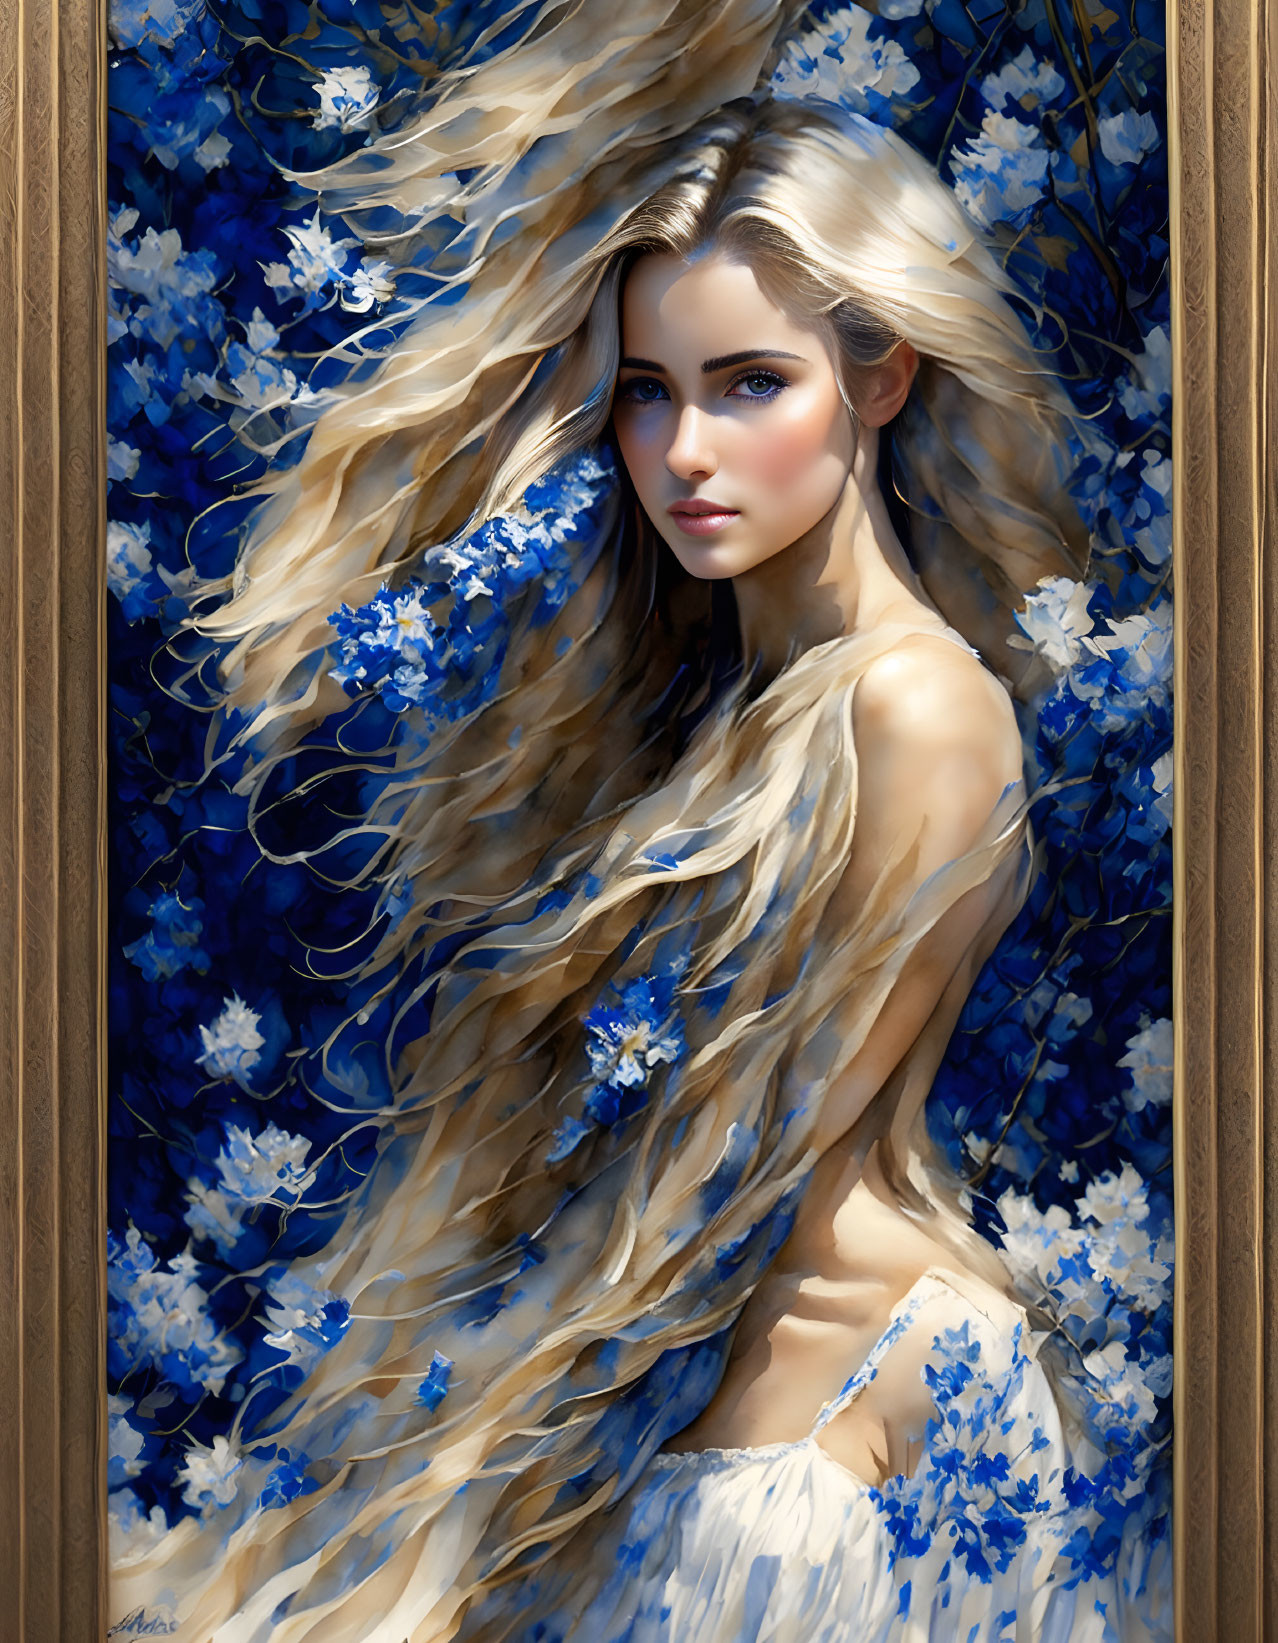 Blonde woman with blue flower-adorned hair in digital art